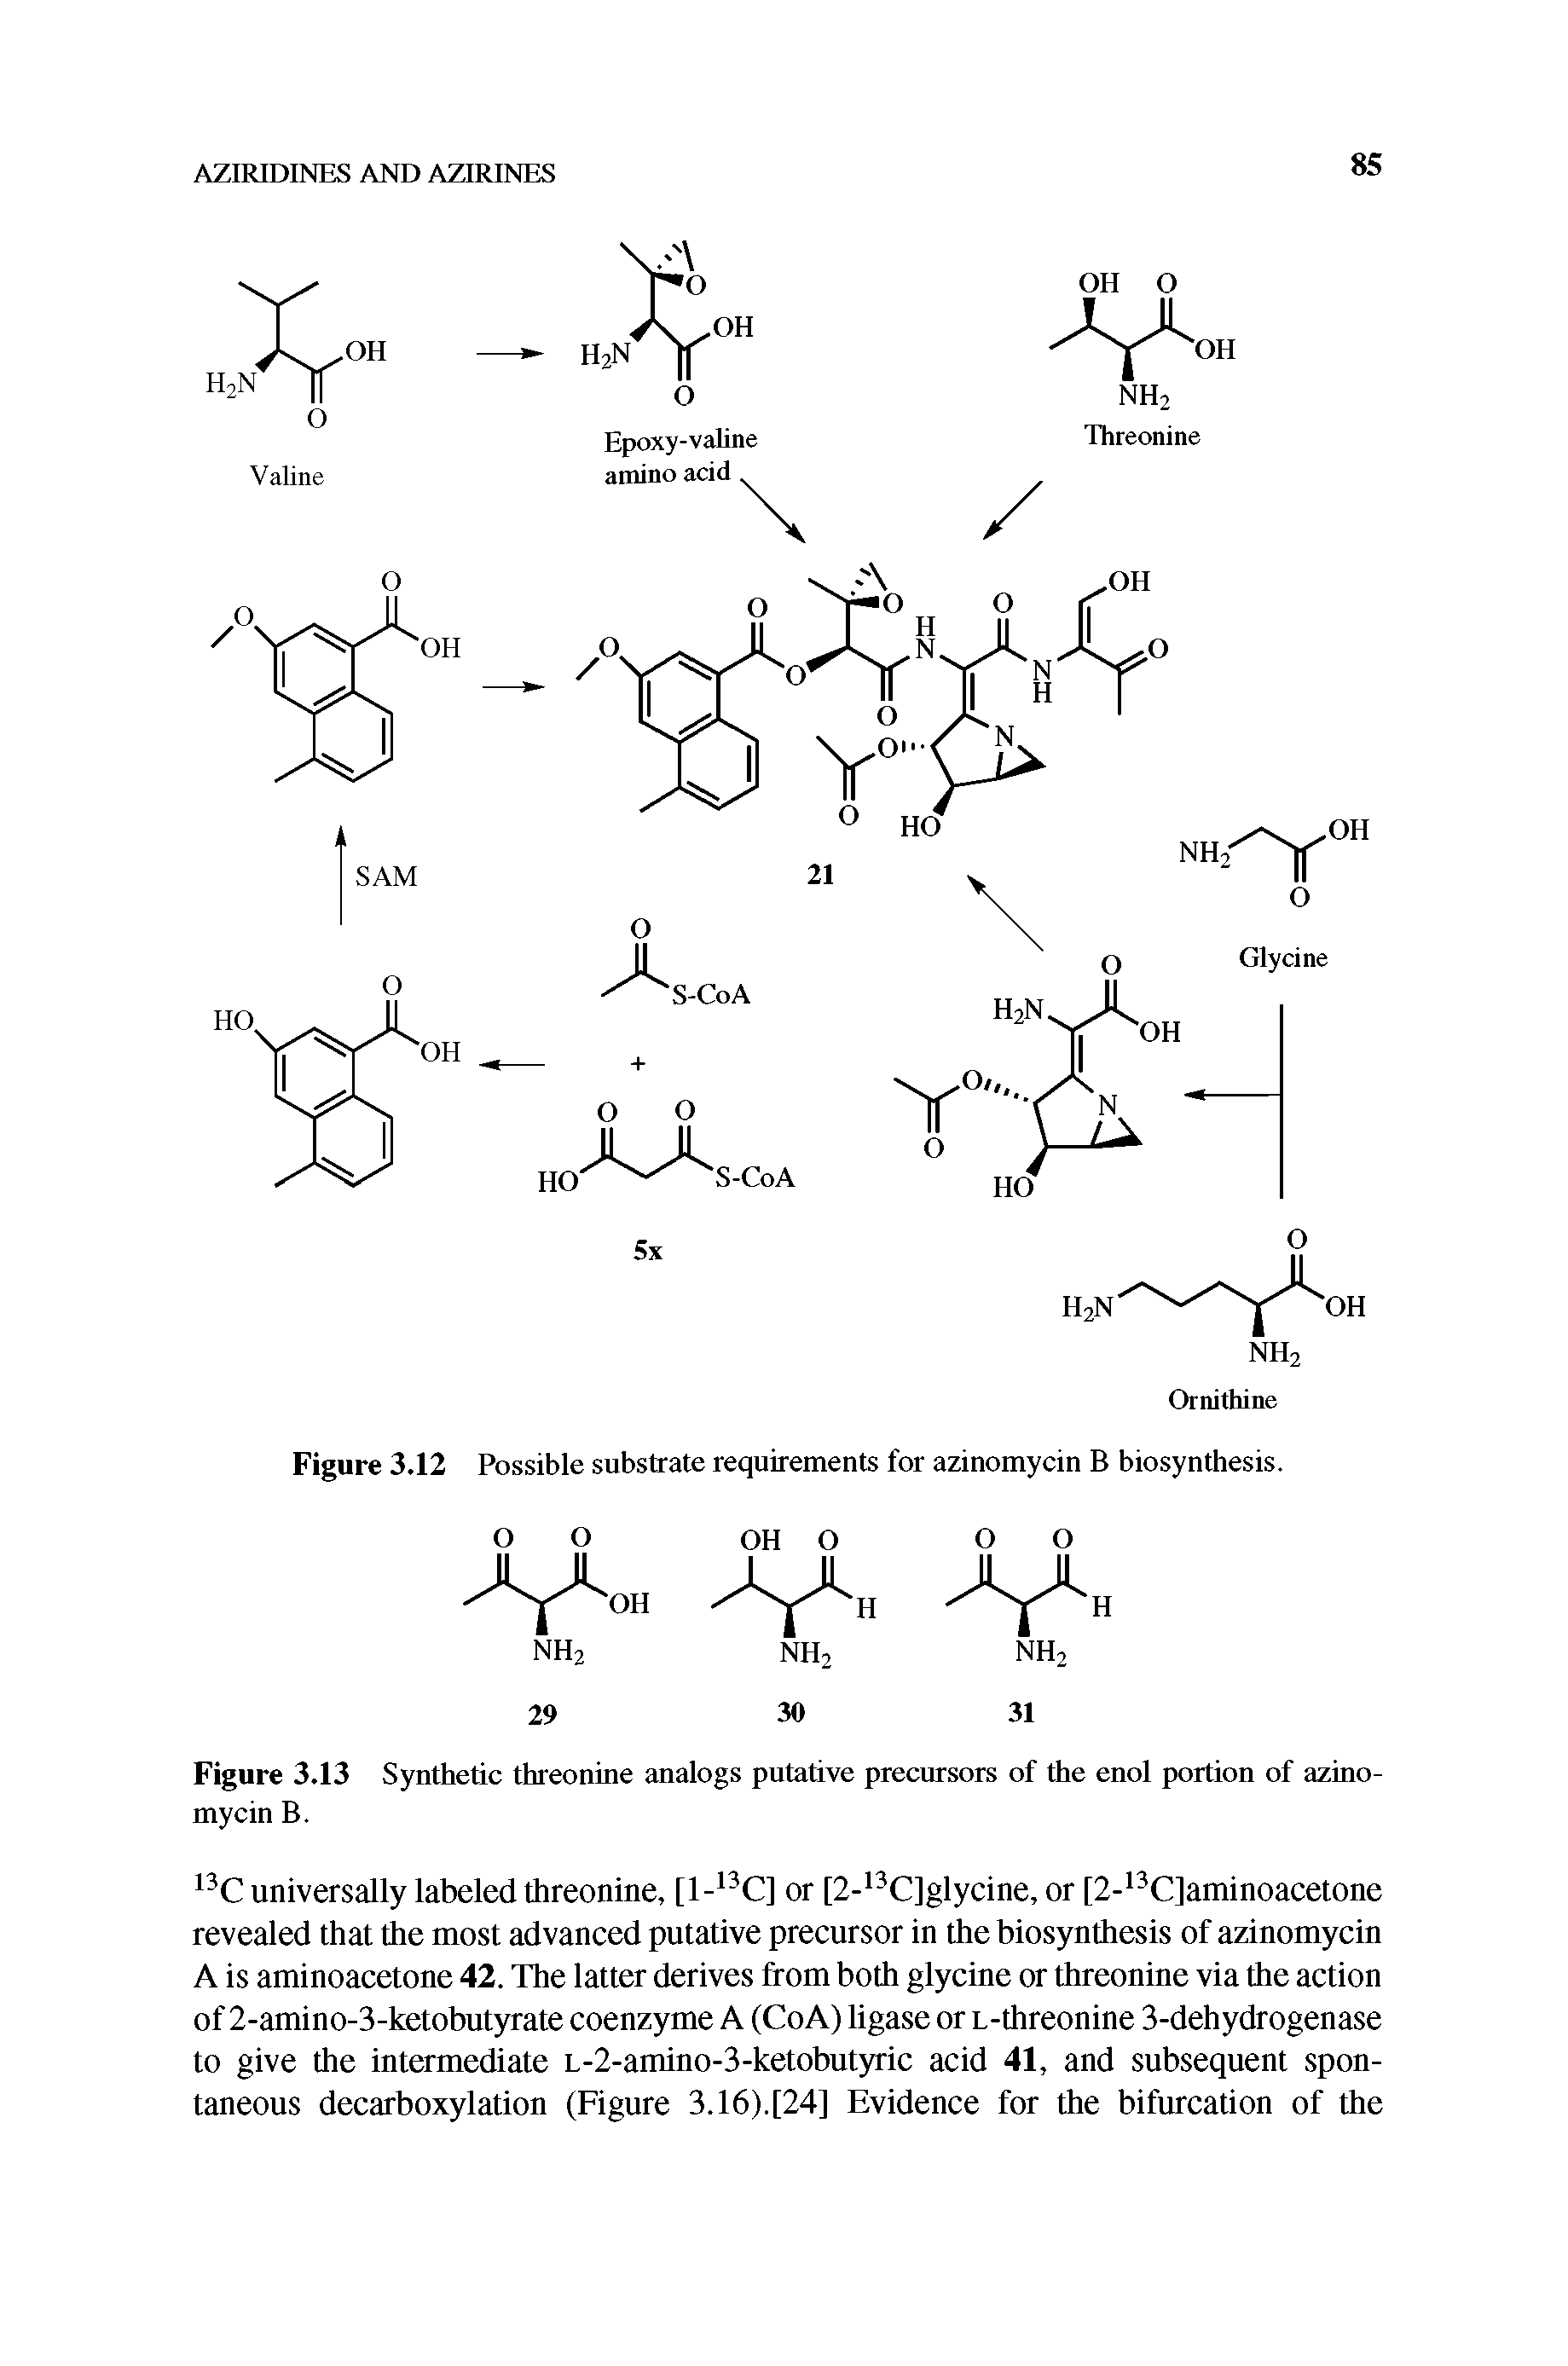 Figure 3.13 Synthetic threonine analogs putative precursors of the enol portion of azinomycin B.